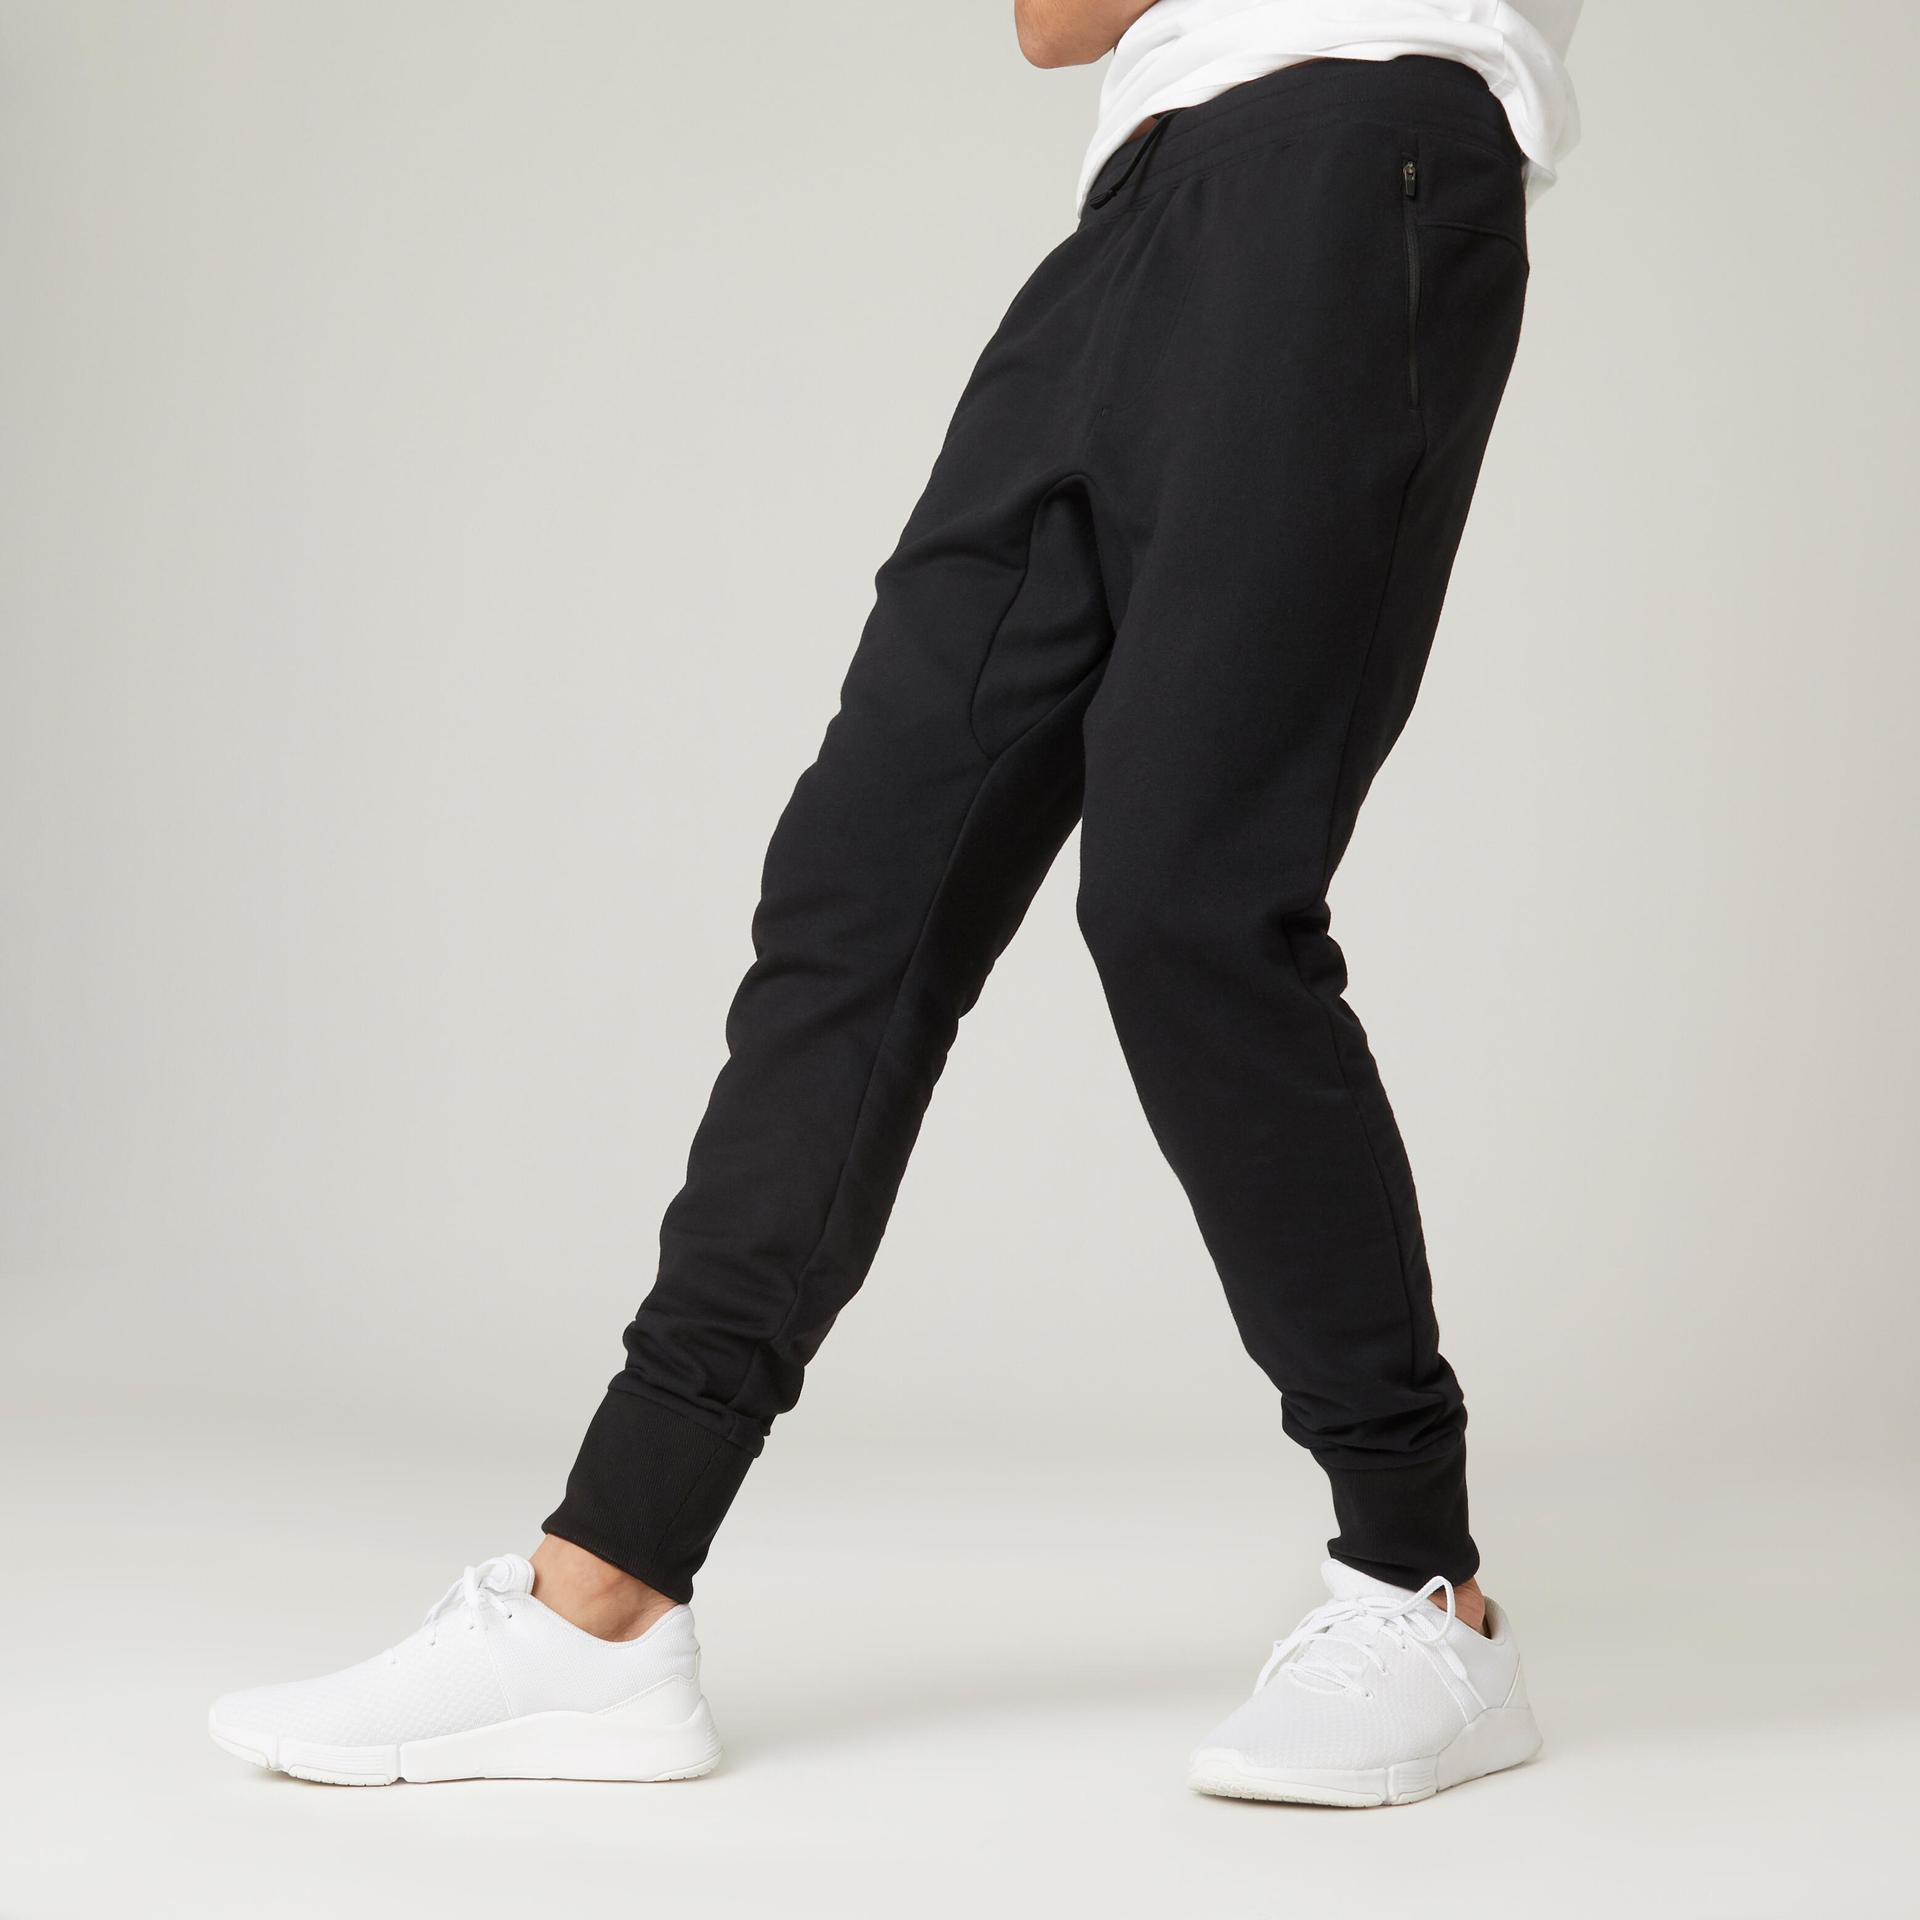 men's cotton gym pants skinny fit 500 - black